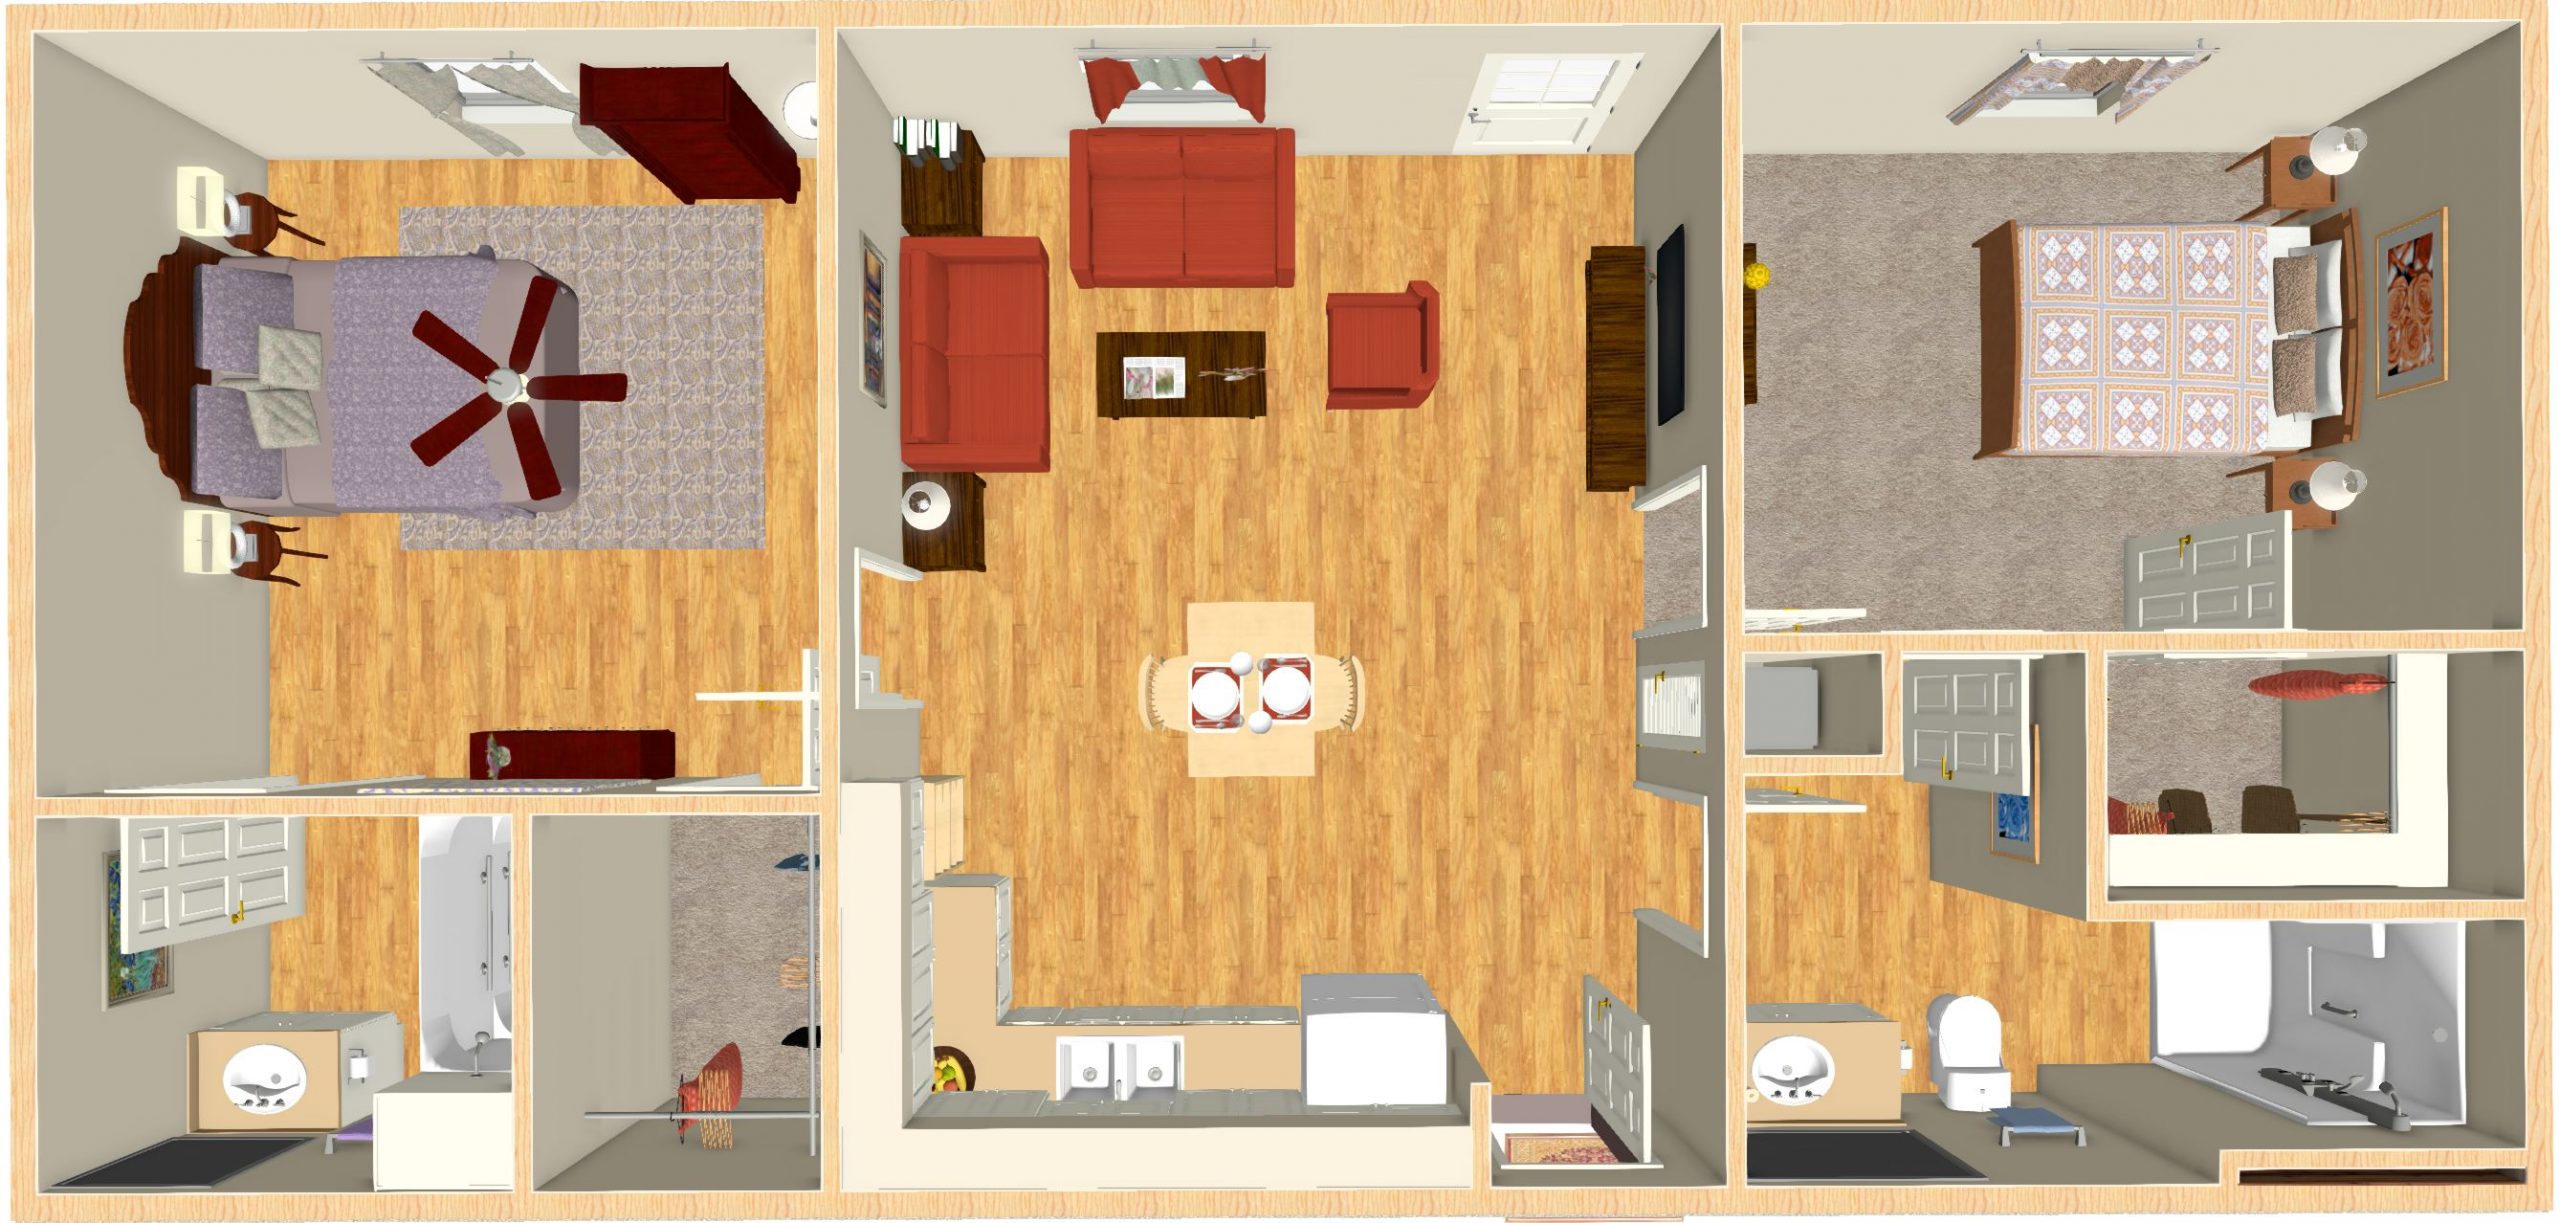 Magnolia Floor Plan - 2 bedrooms, 2 baths